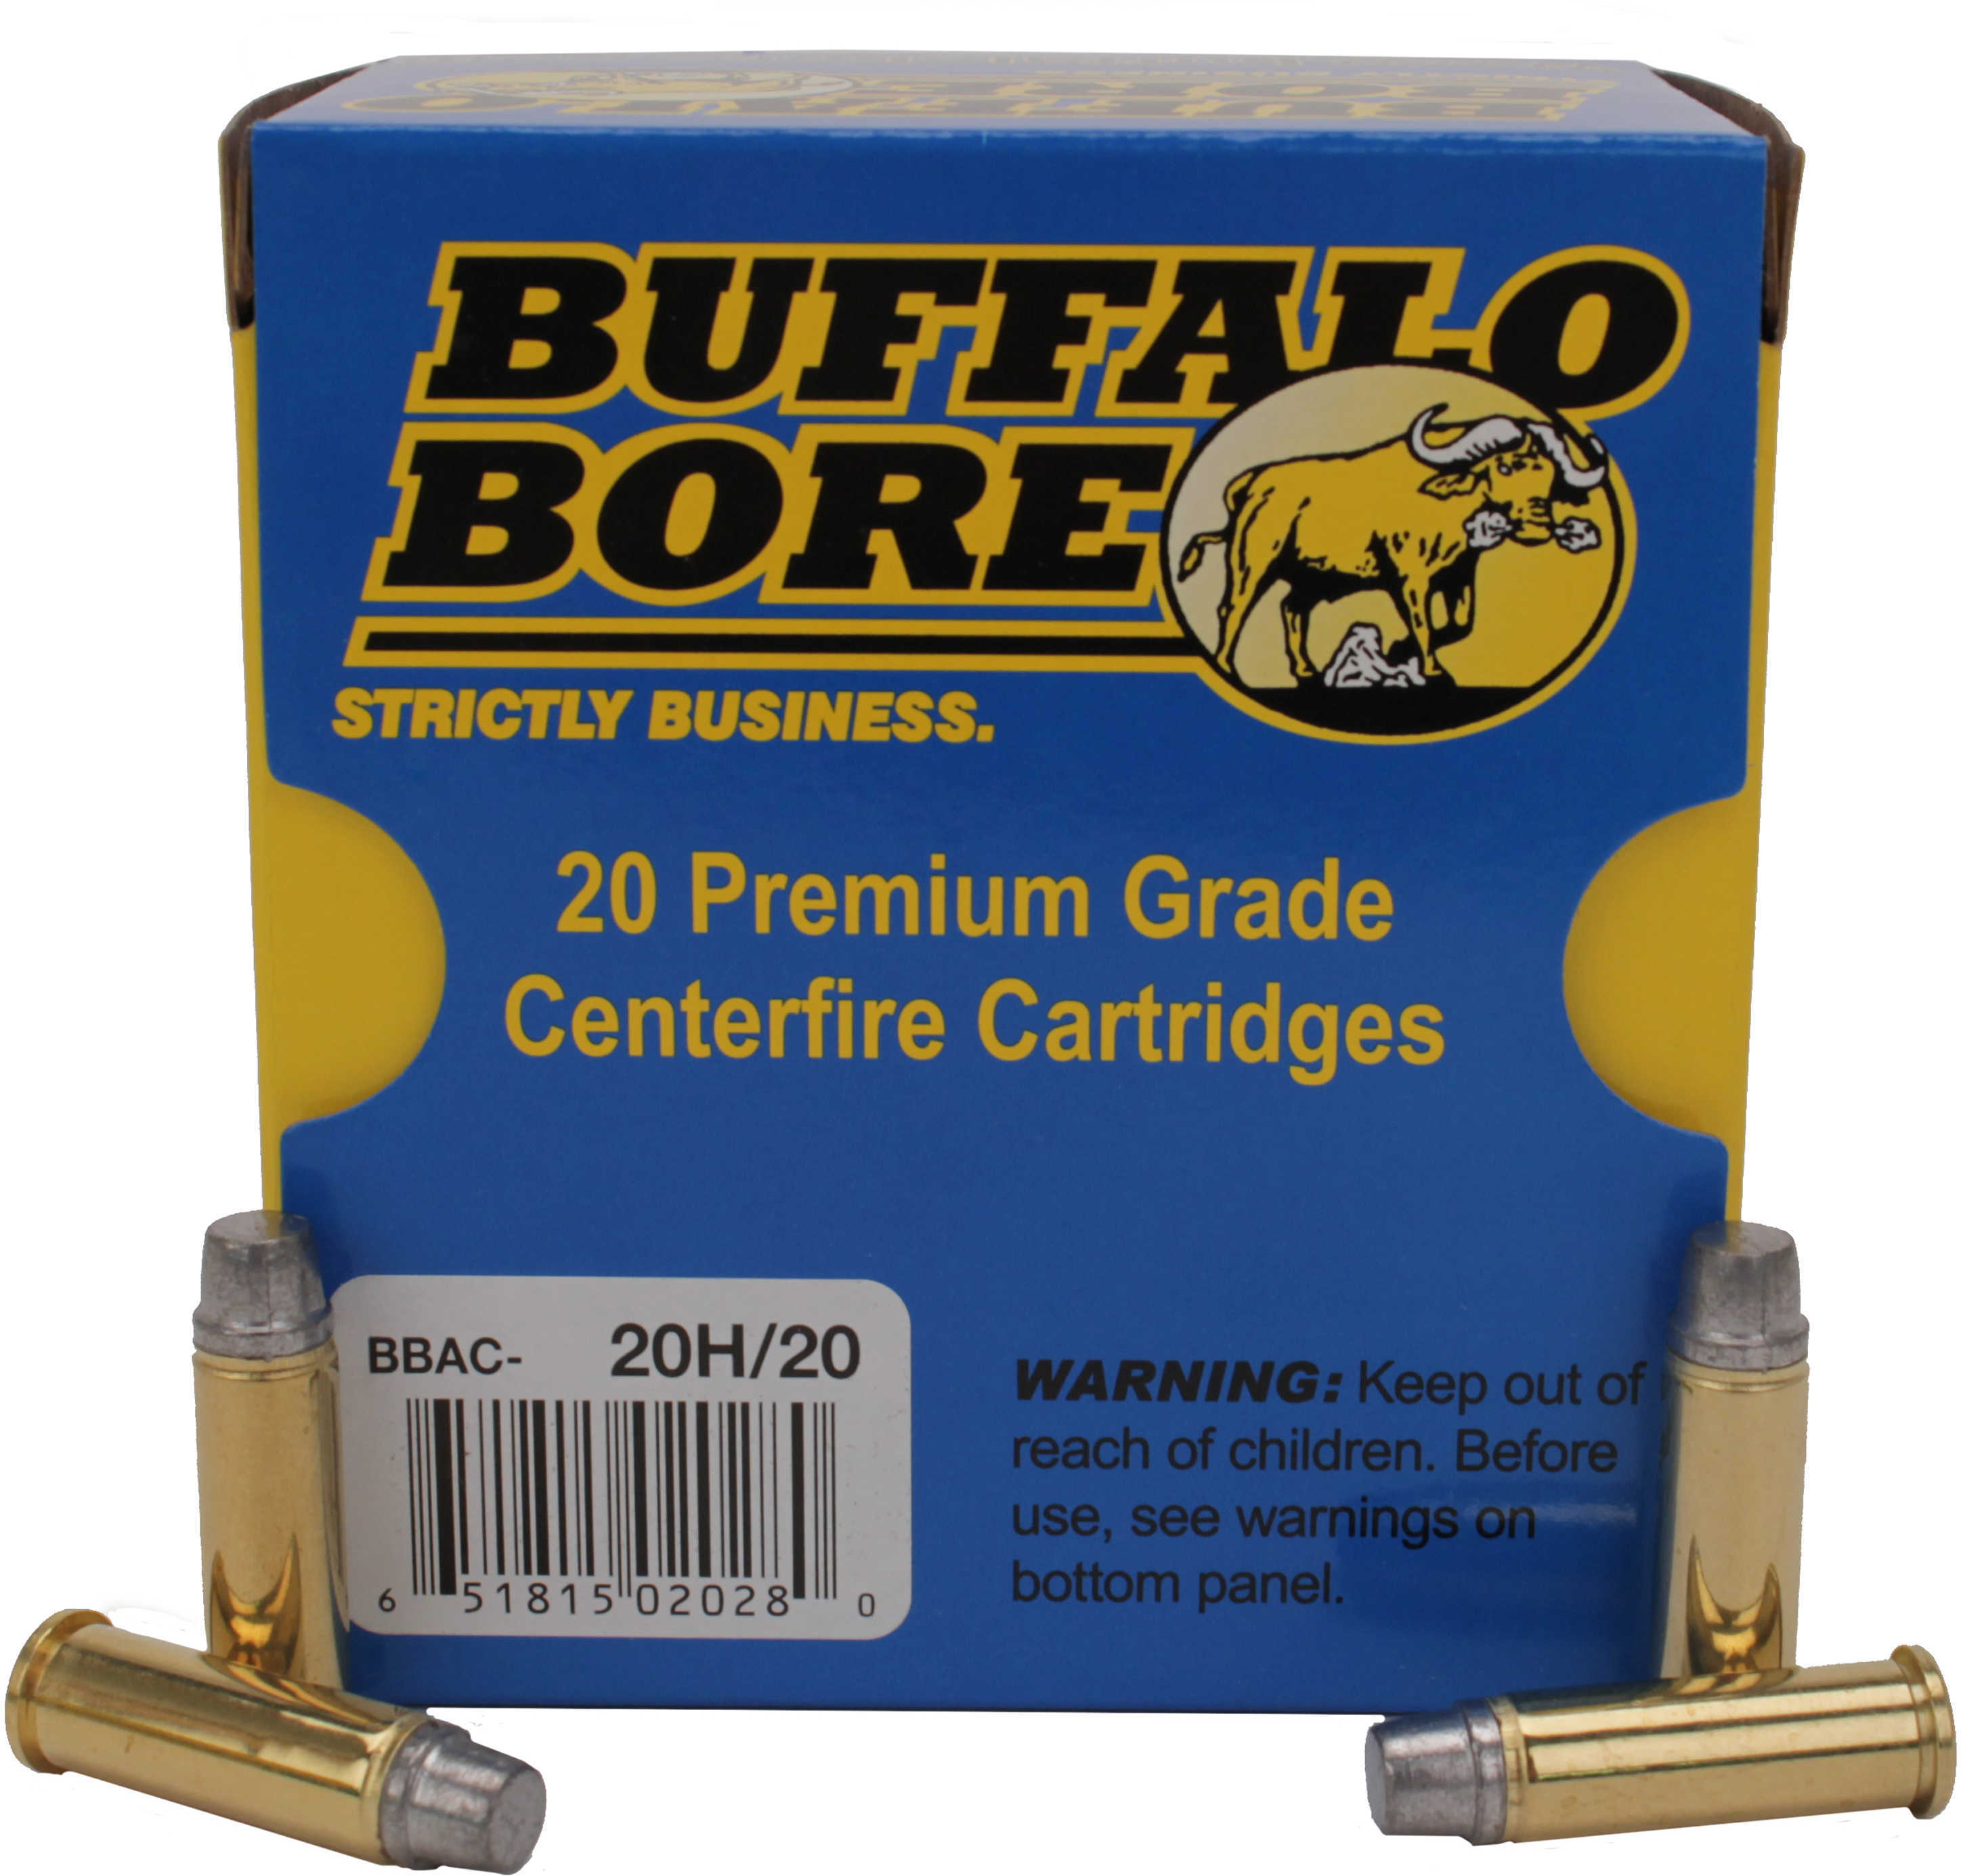 38 Special 158 Grain Lead 20 Rounds Buffalo Bore Ammunition